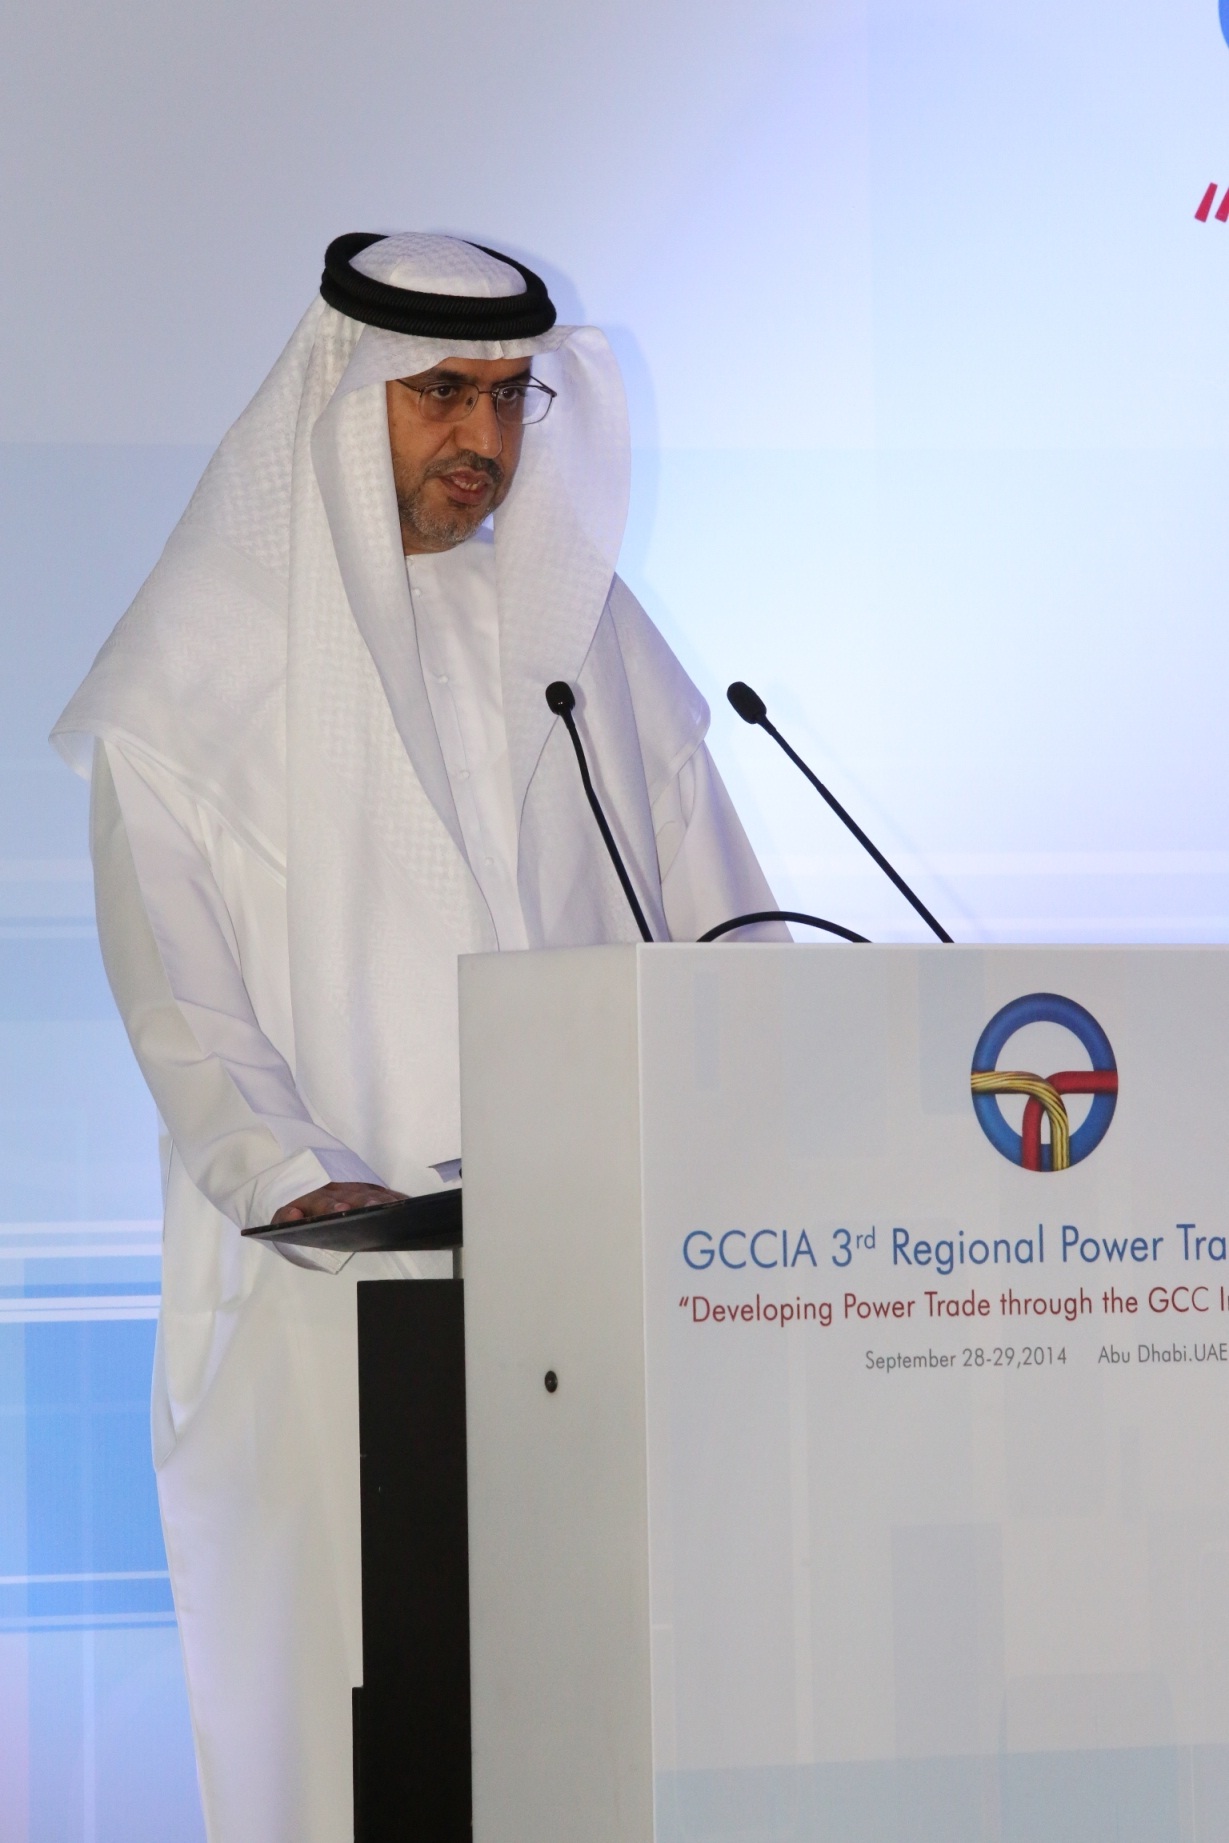 Under-Secretary of the UAE Ministry of Energy Matar Al-Neyadi